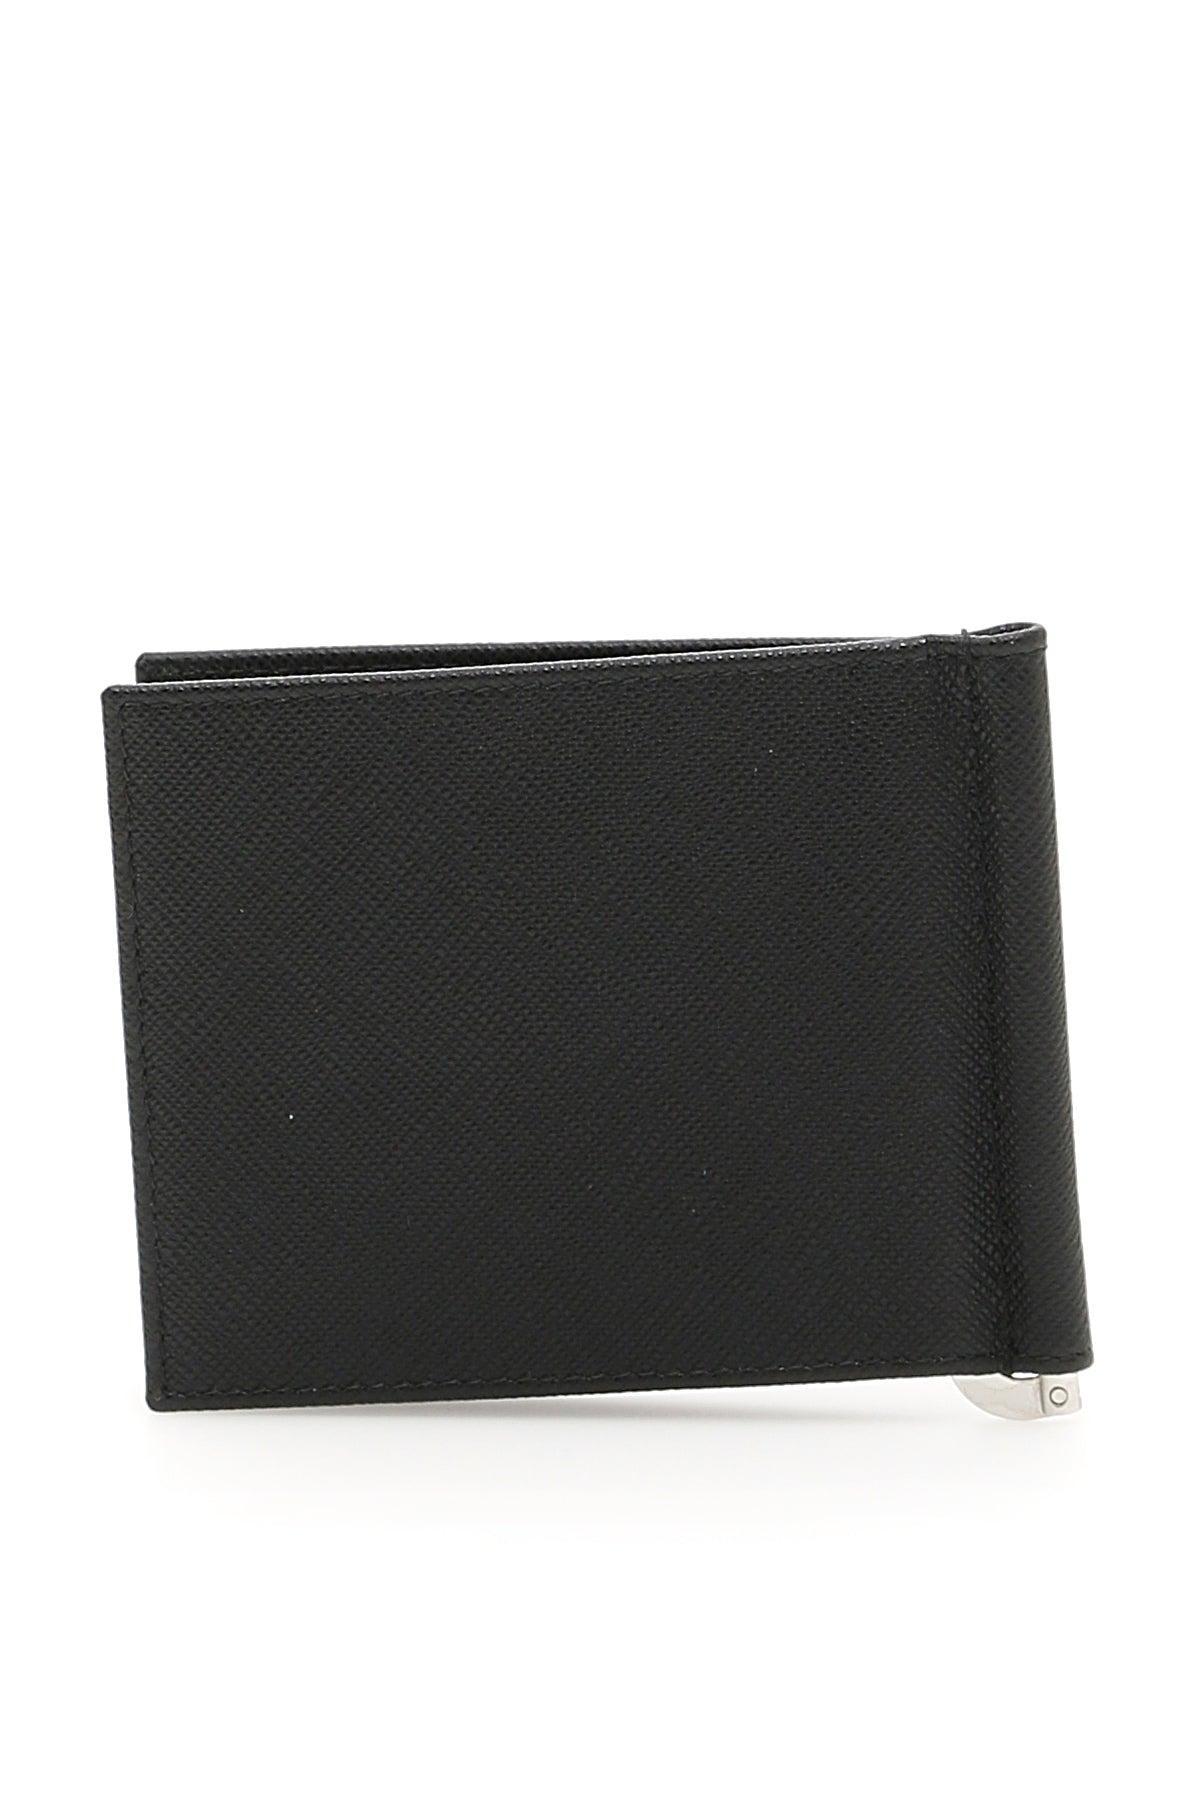 Prada Saffiano Metal Leather Money Clip Bifold Wallet Prada